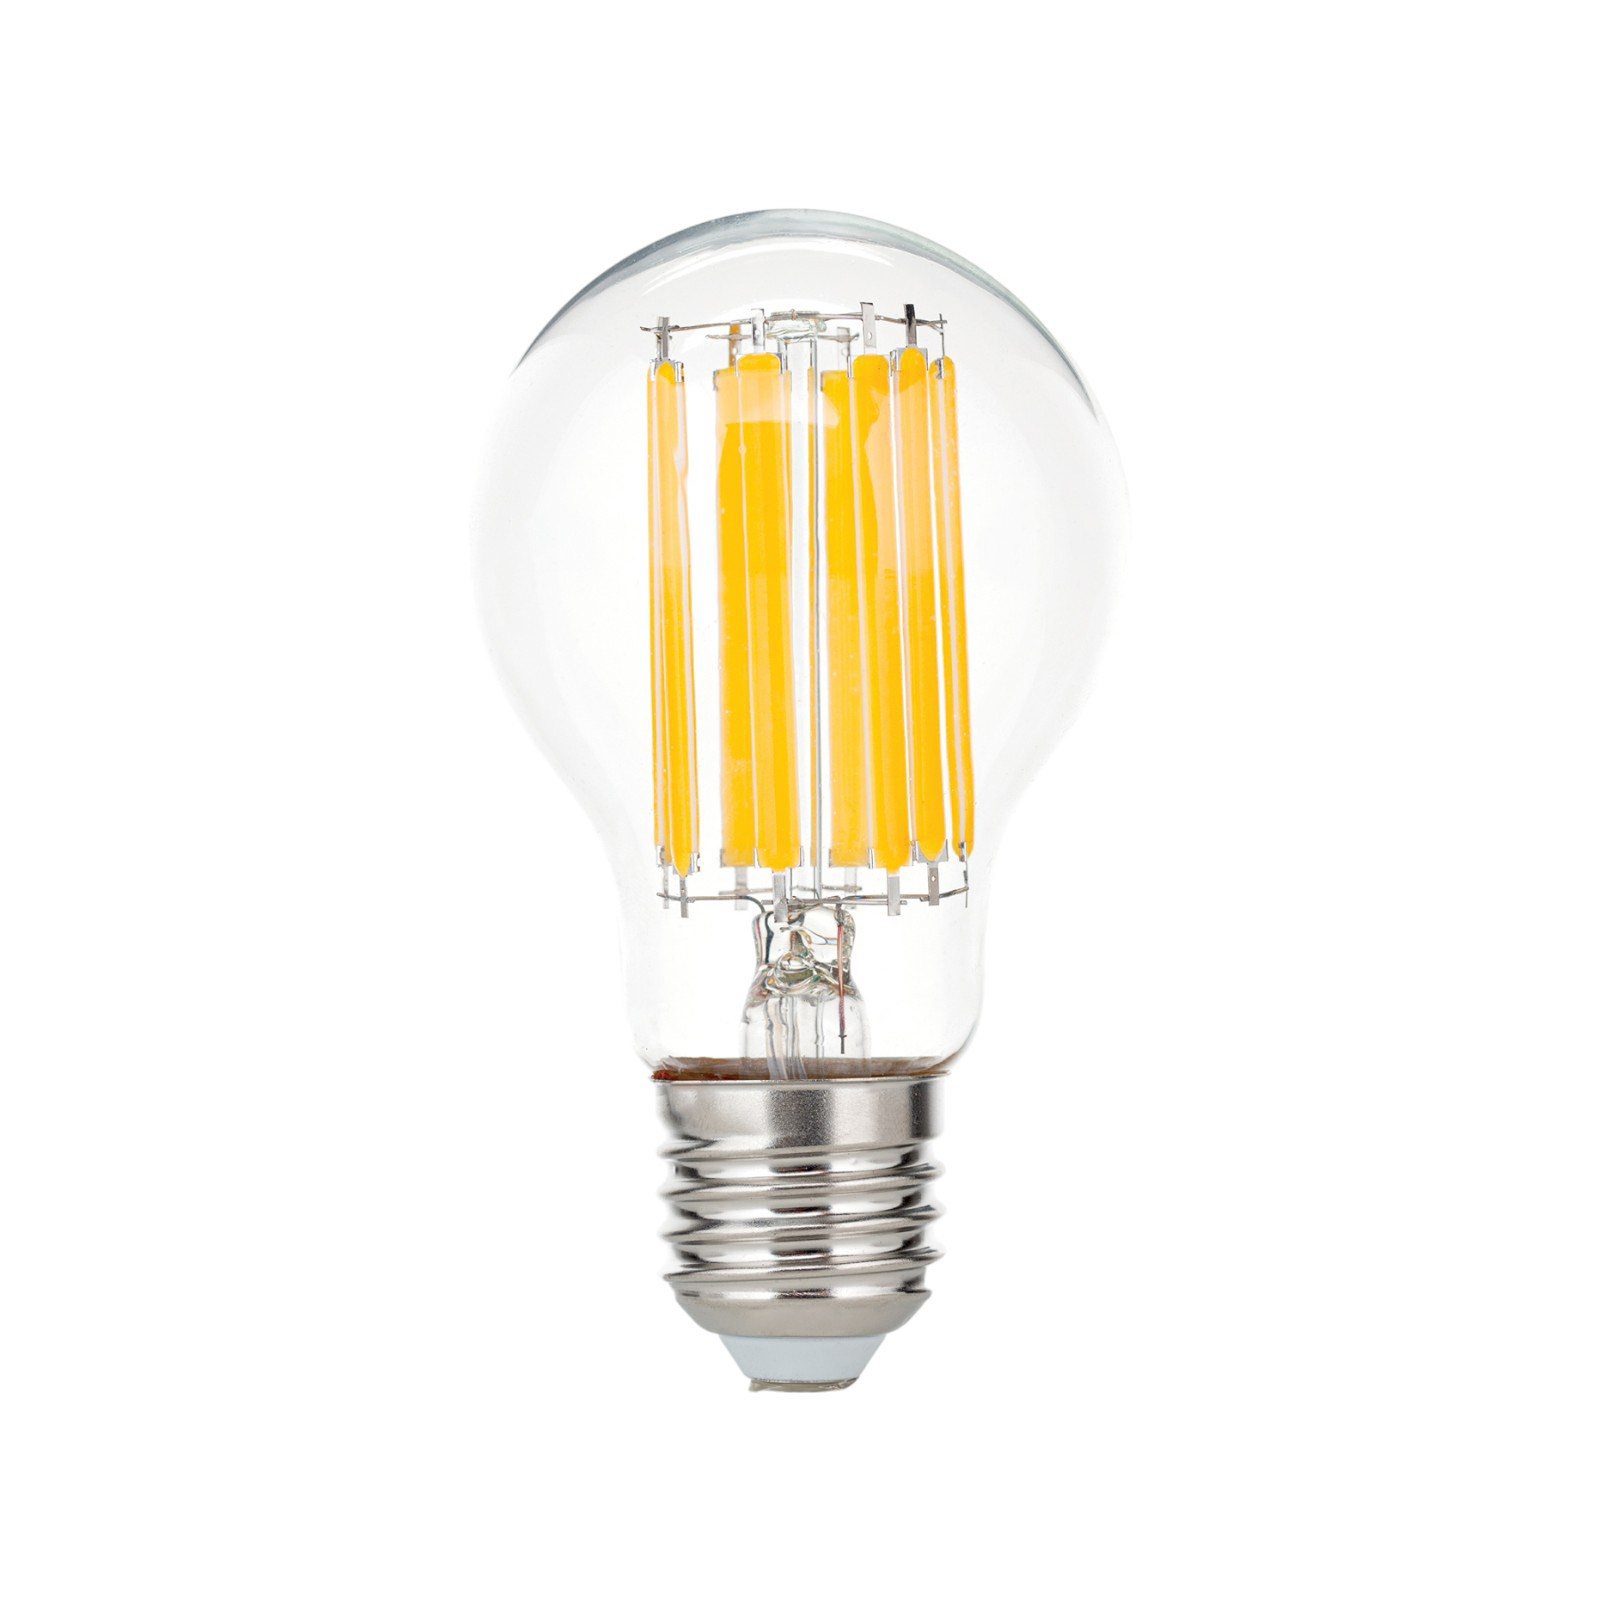 LED filament lamp E27 A60 helder 15W 827 2000lm dimbaar